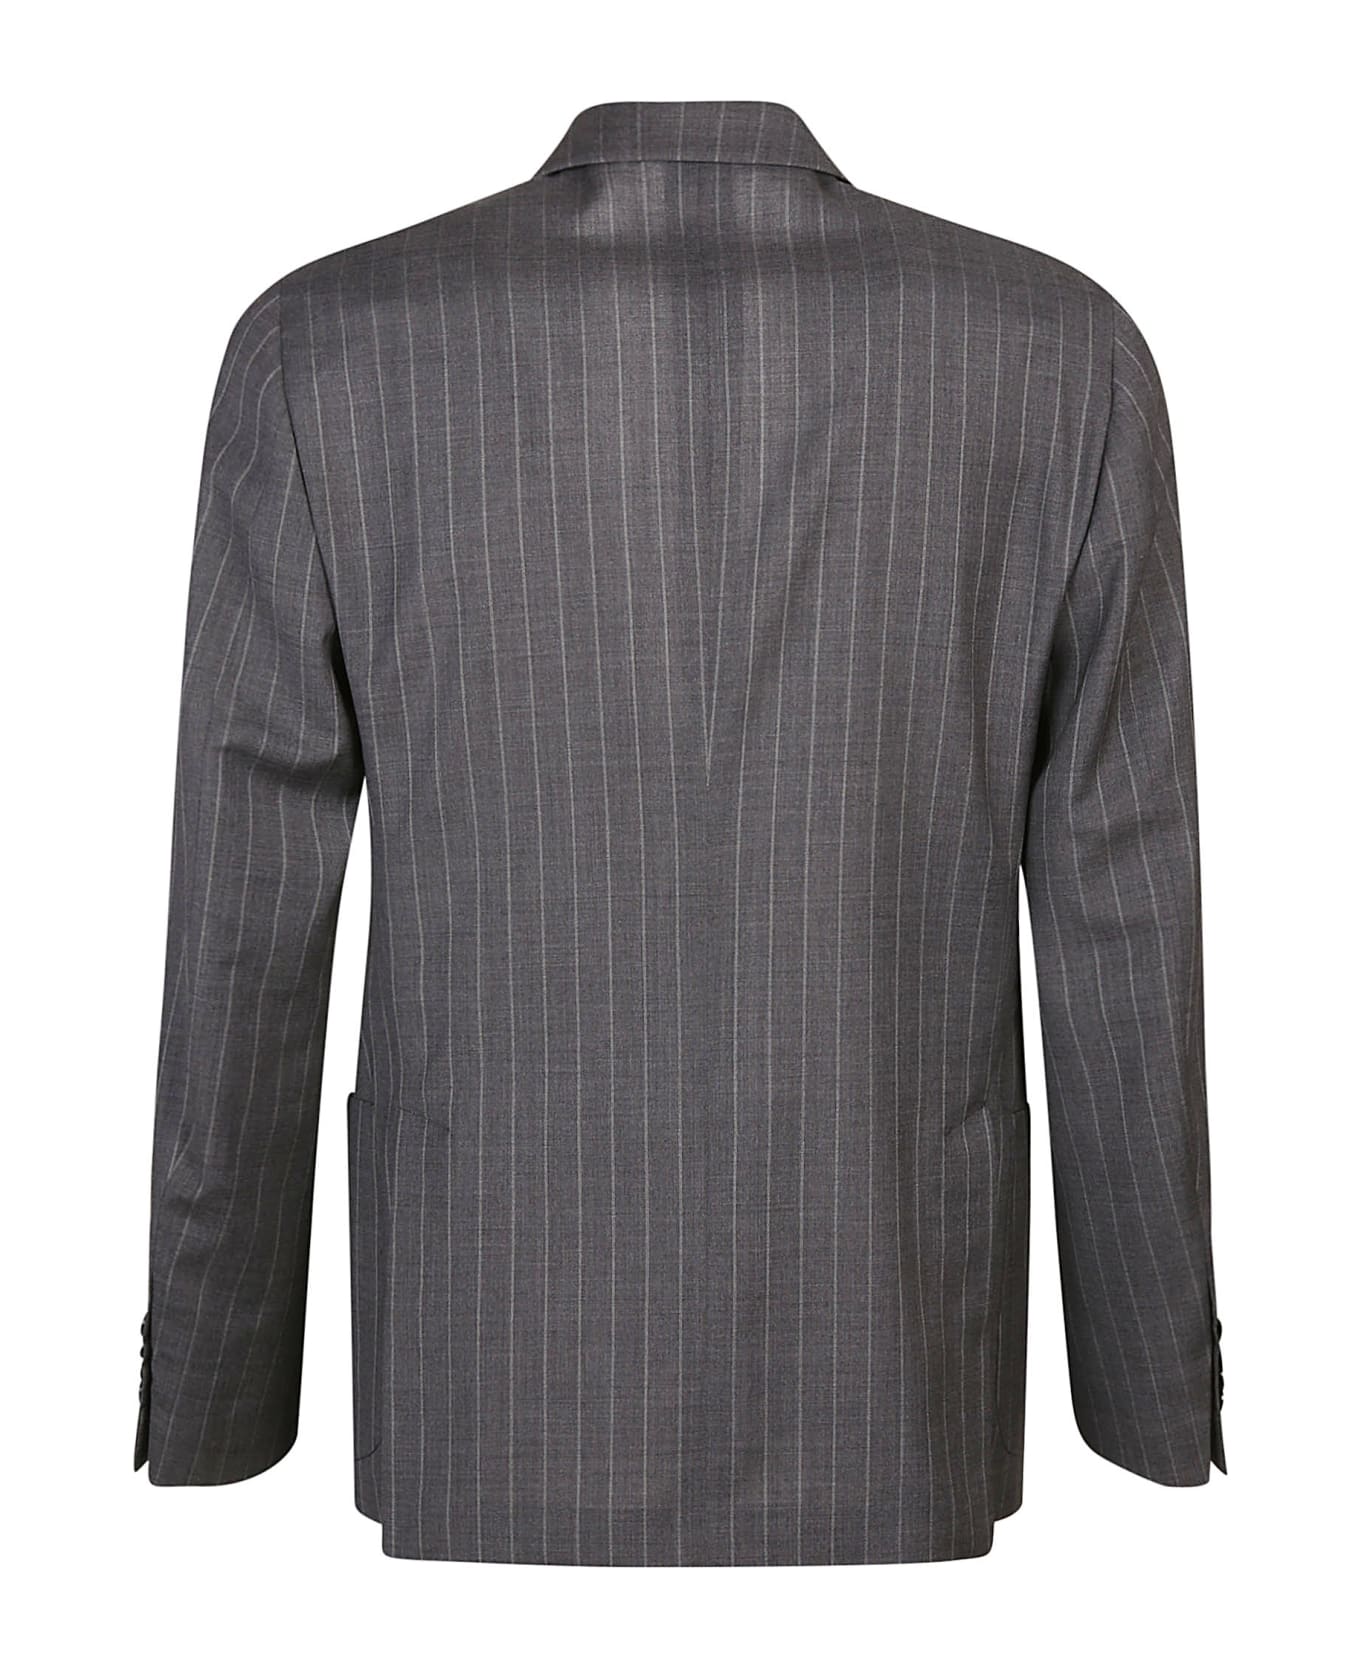 Lardini Easy Wear Suit - Grigio